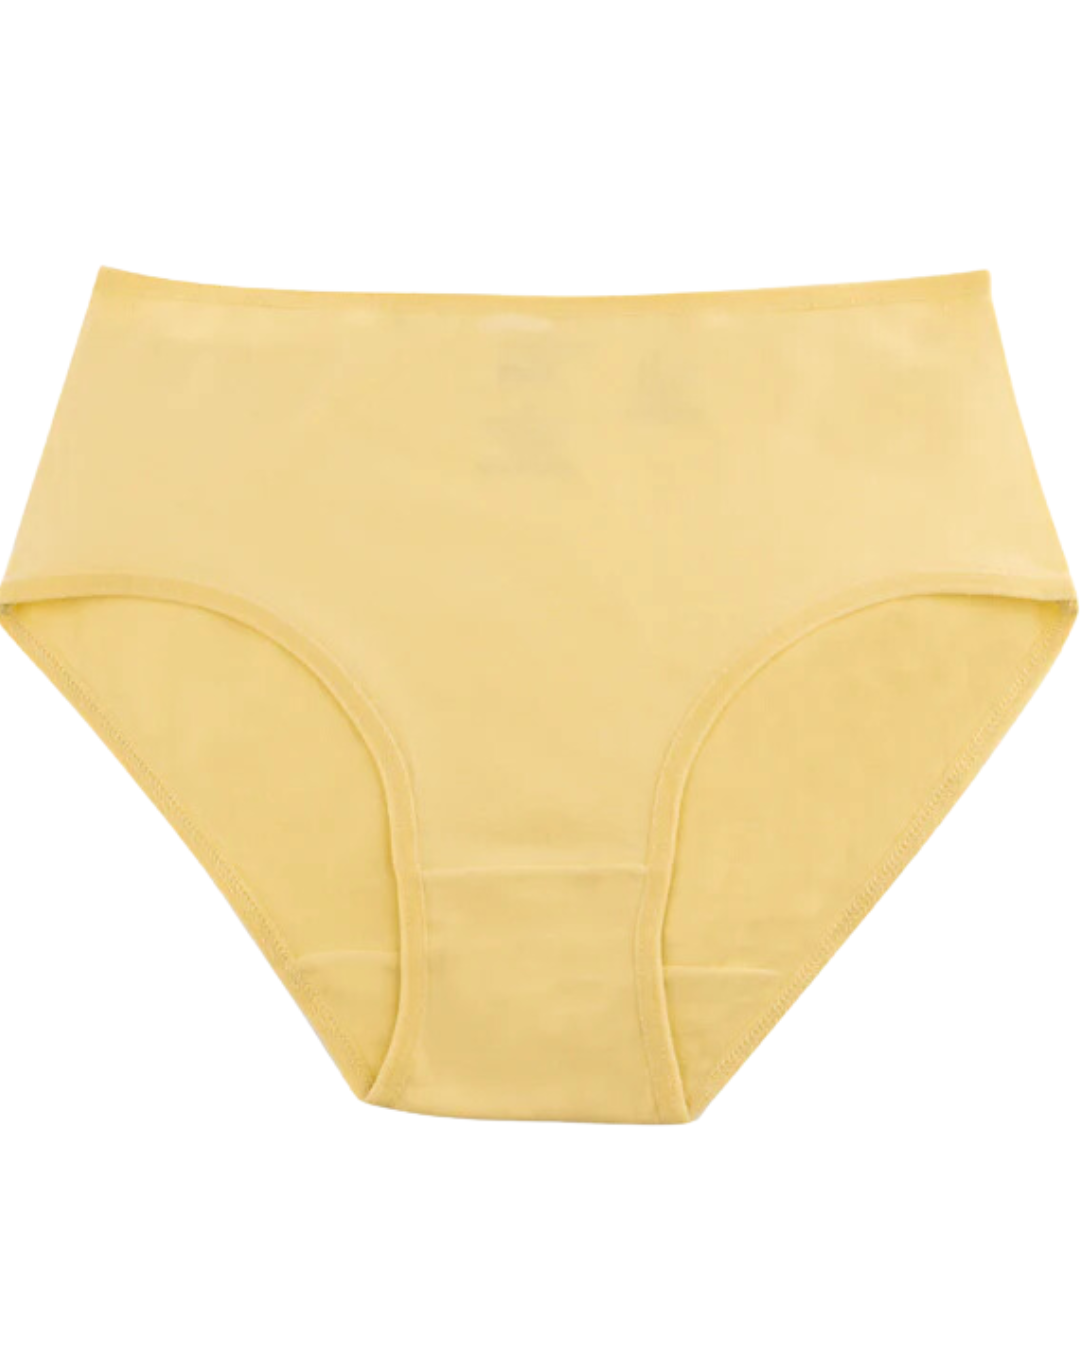 Underwear for women, midi, plain pack 3